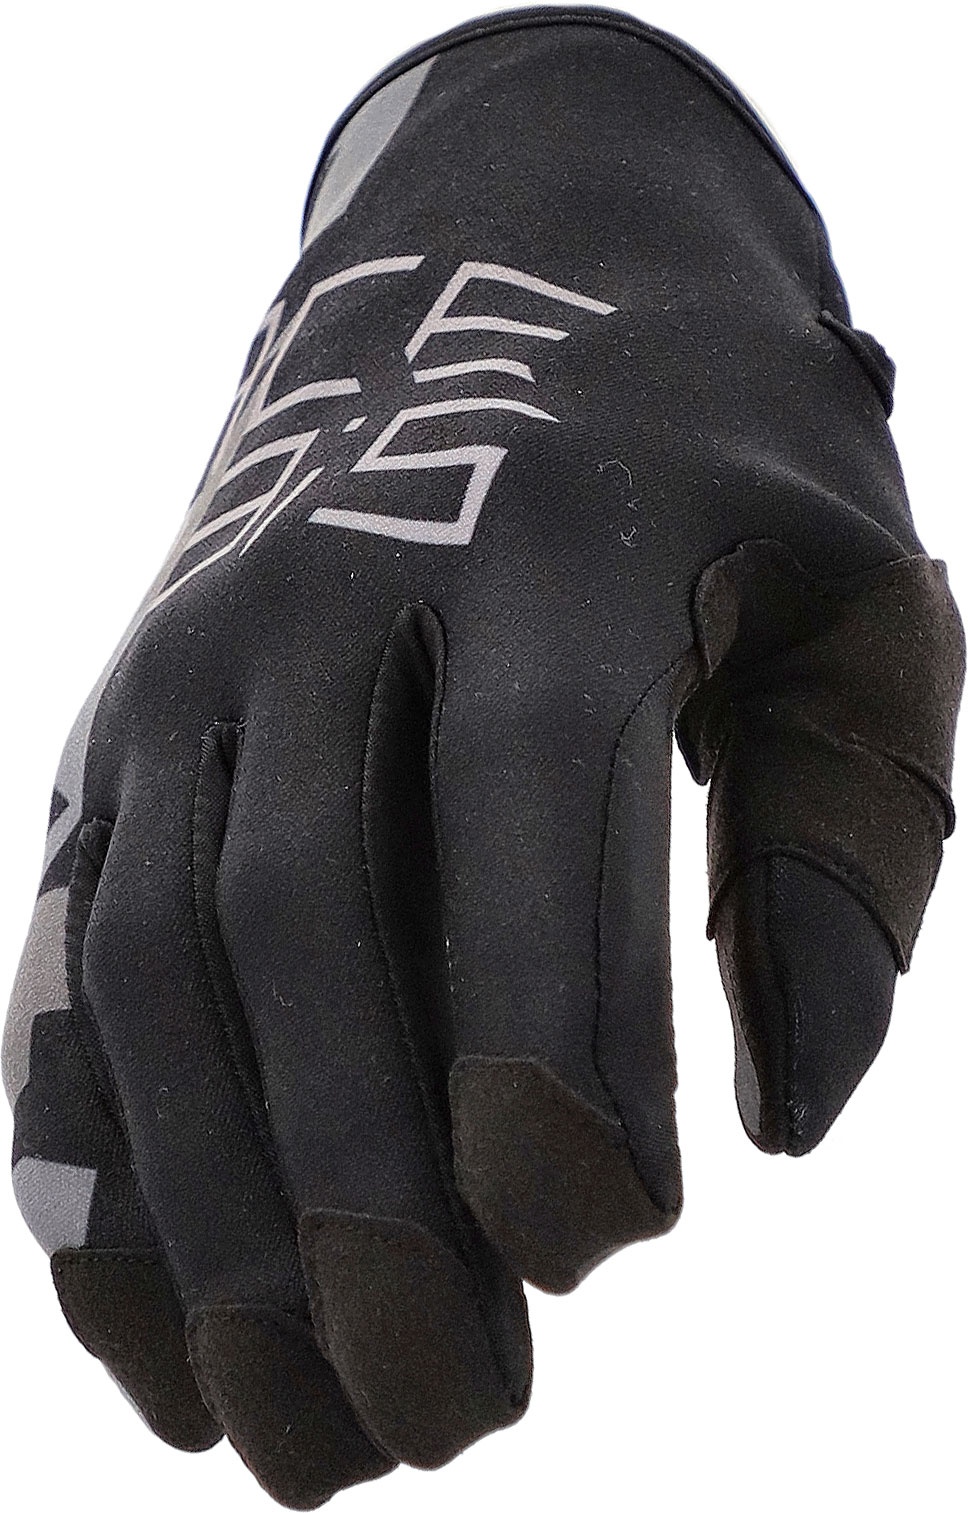 Acerbis Zero Degree 3.0, gants - Noir/Gris - XXL